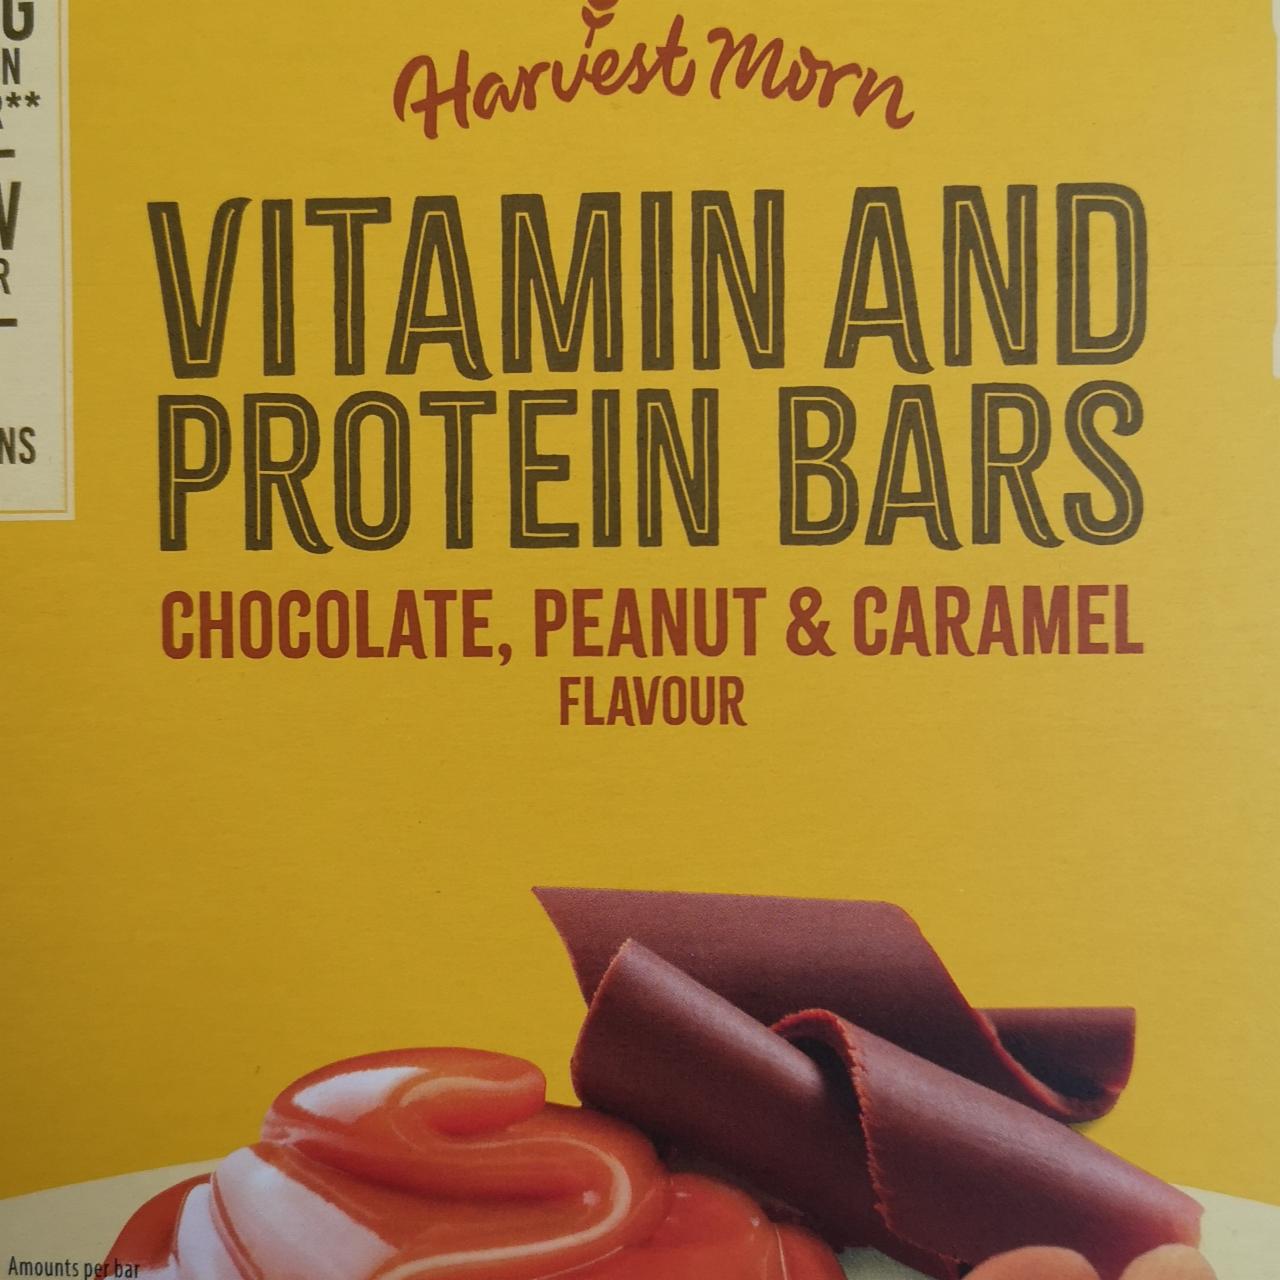 Fotografie - Vitamin and Protein Bar Chocolate, peanut & caramel flavour Harvest Morn